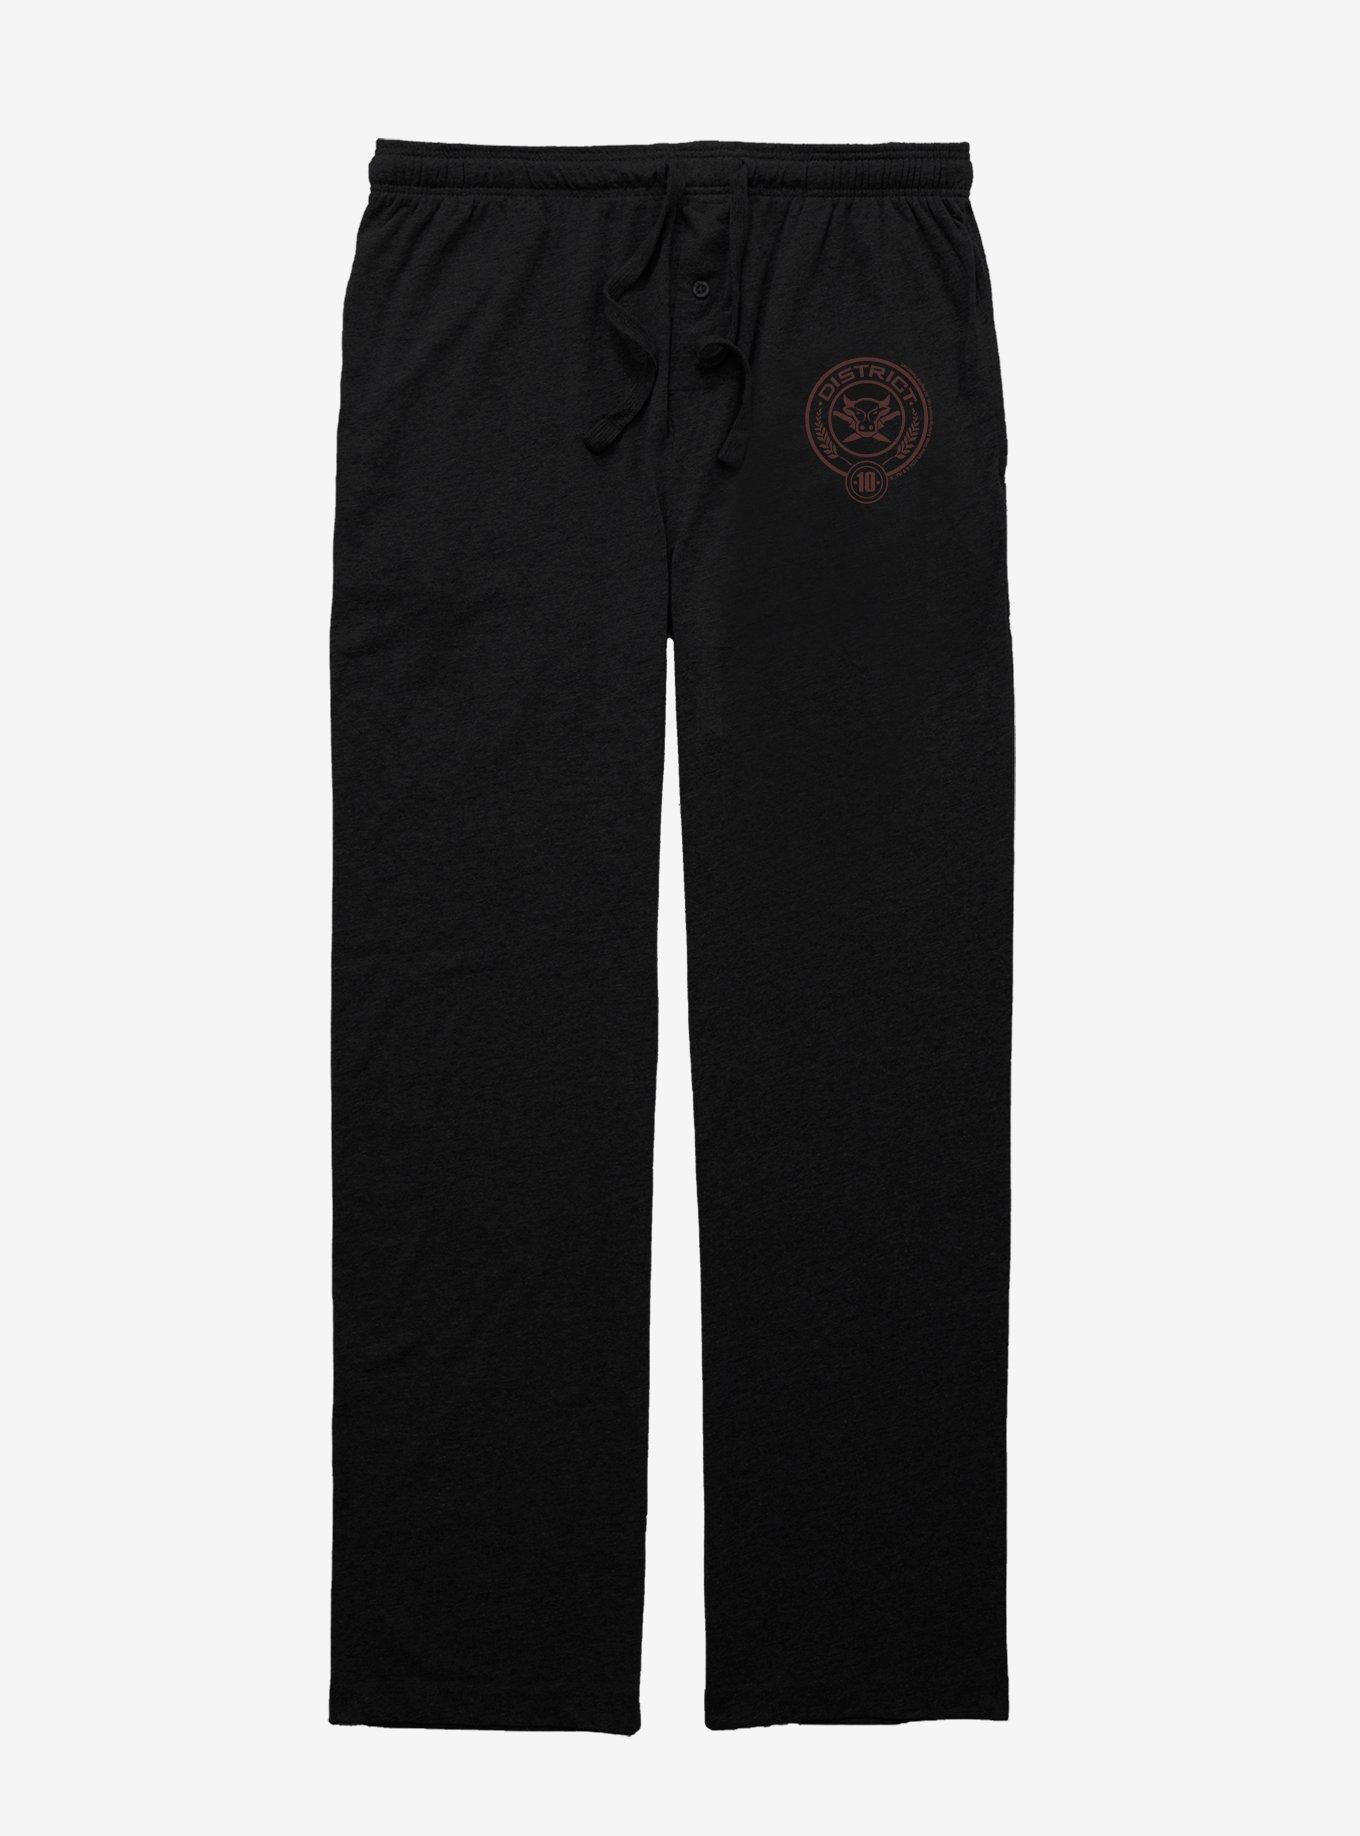 Hunger Games District 10 Emblem Pajama Pants, BLACK, hi-res